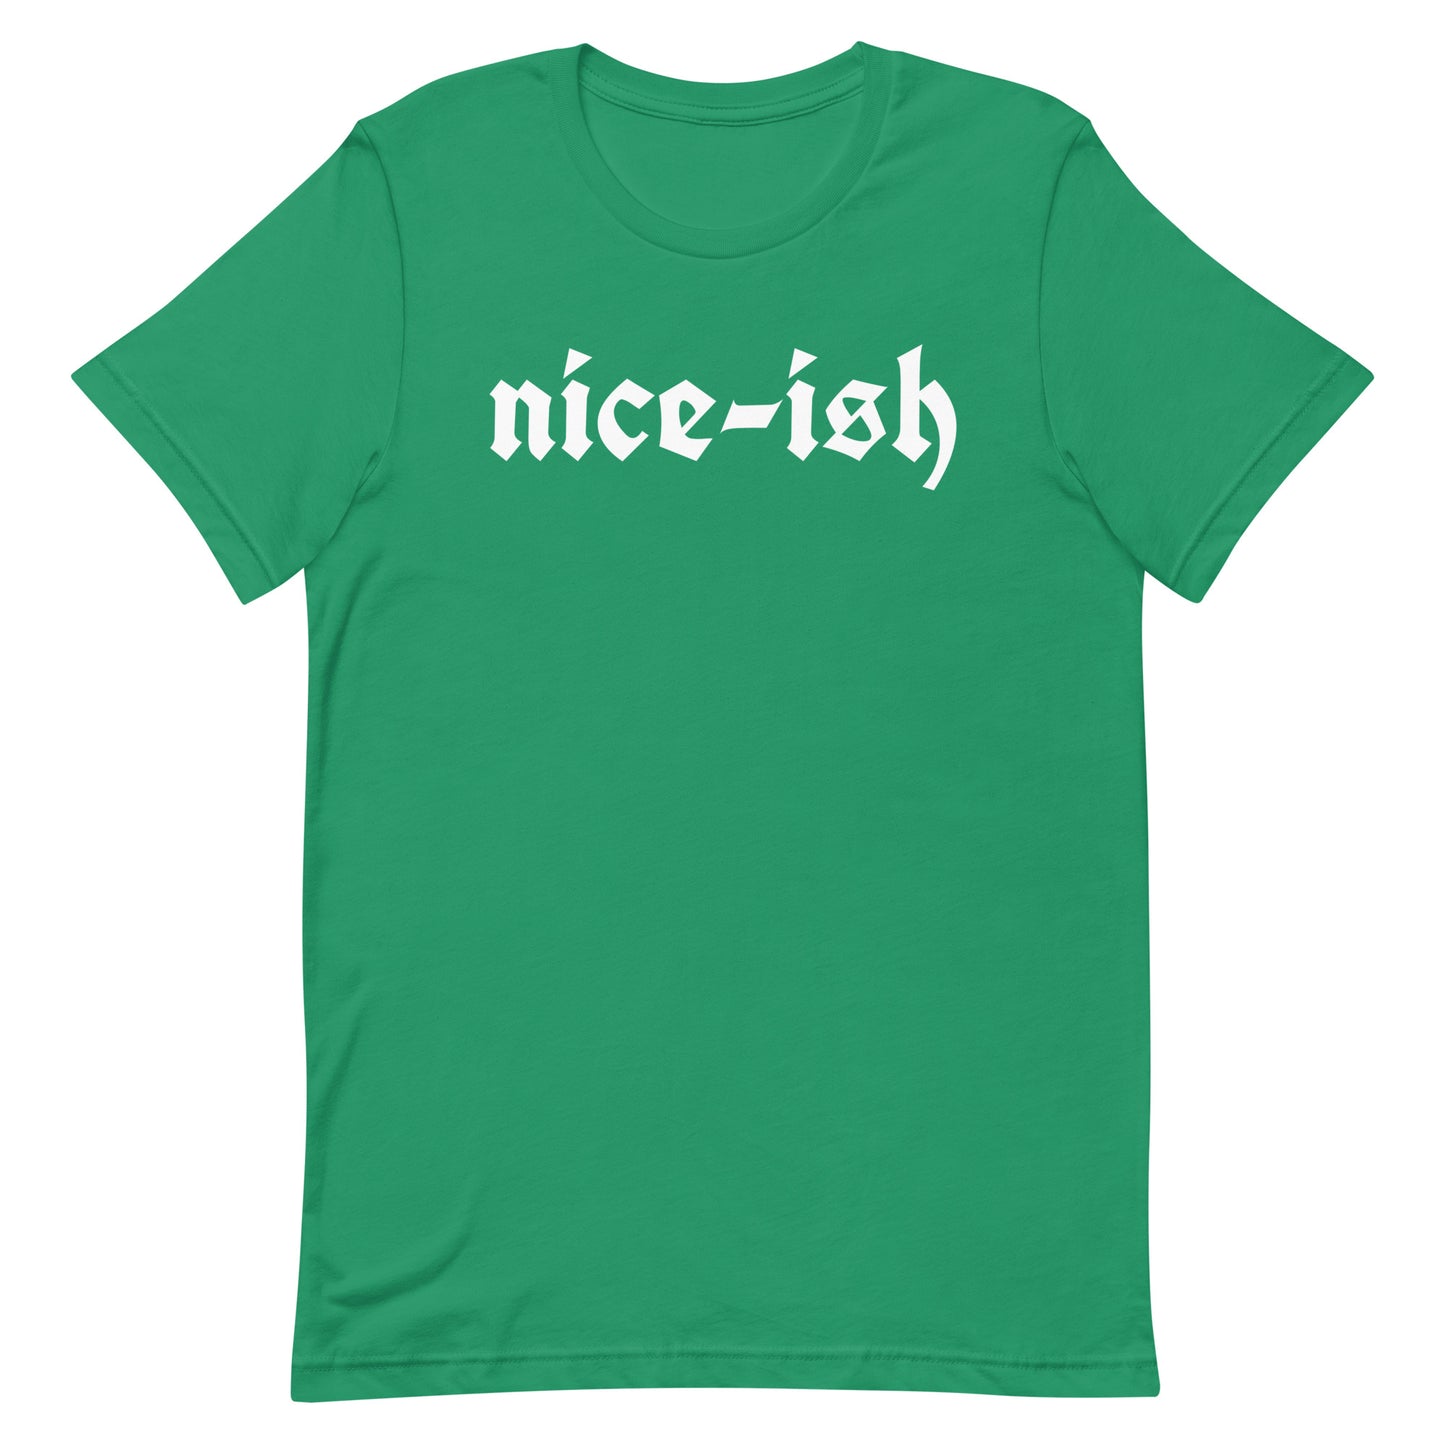 Holiday T-shirt in Nice-ish